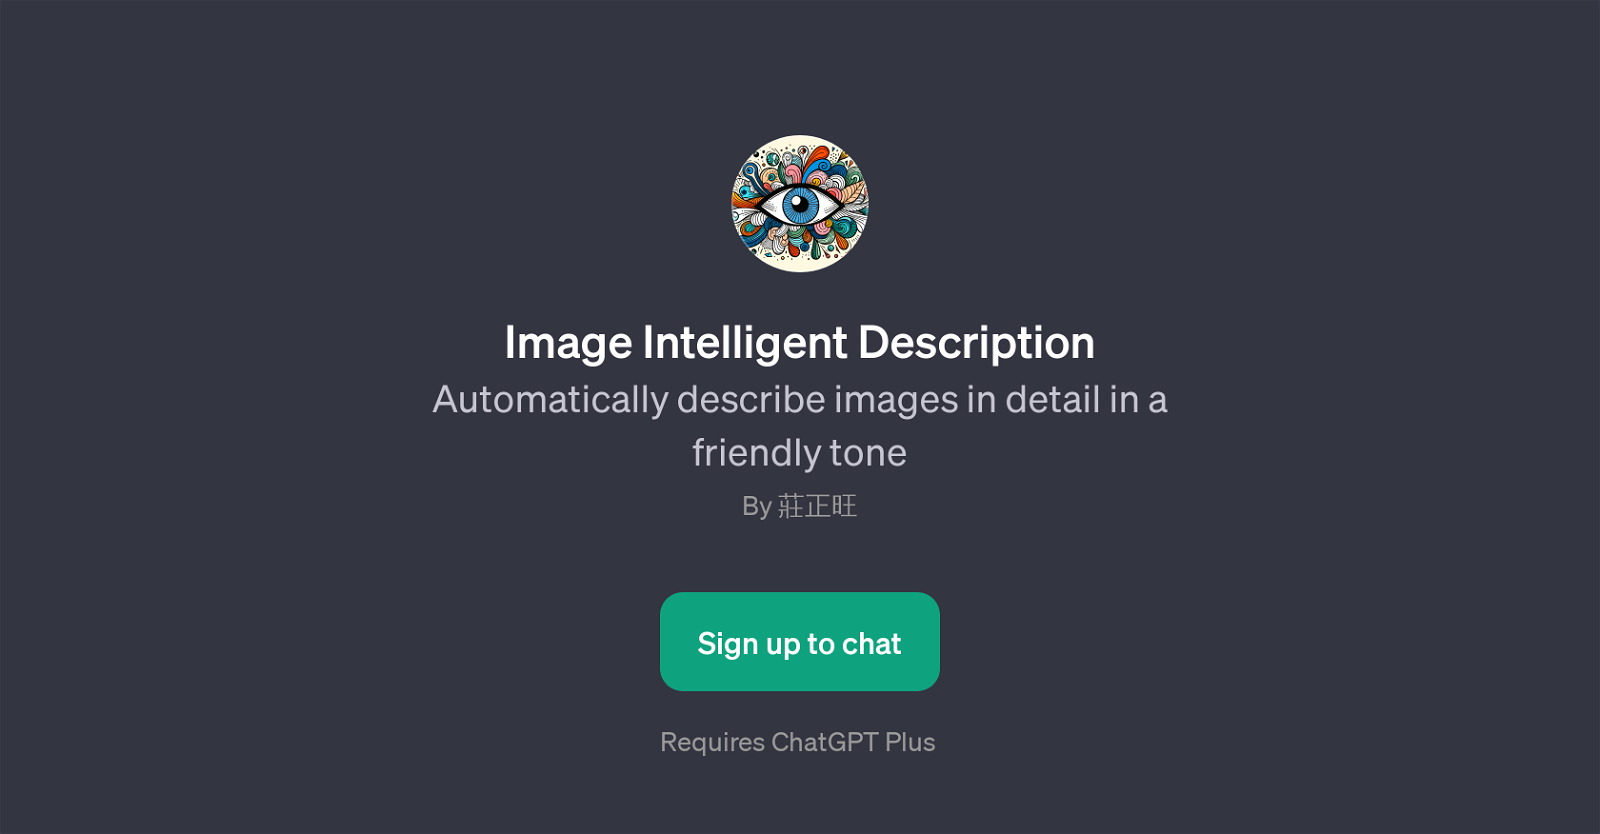 Image Intelligent Description website